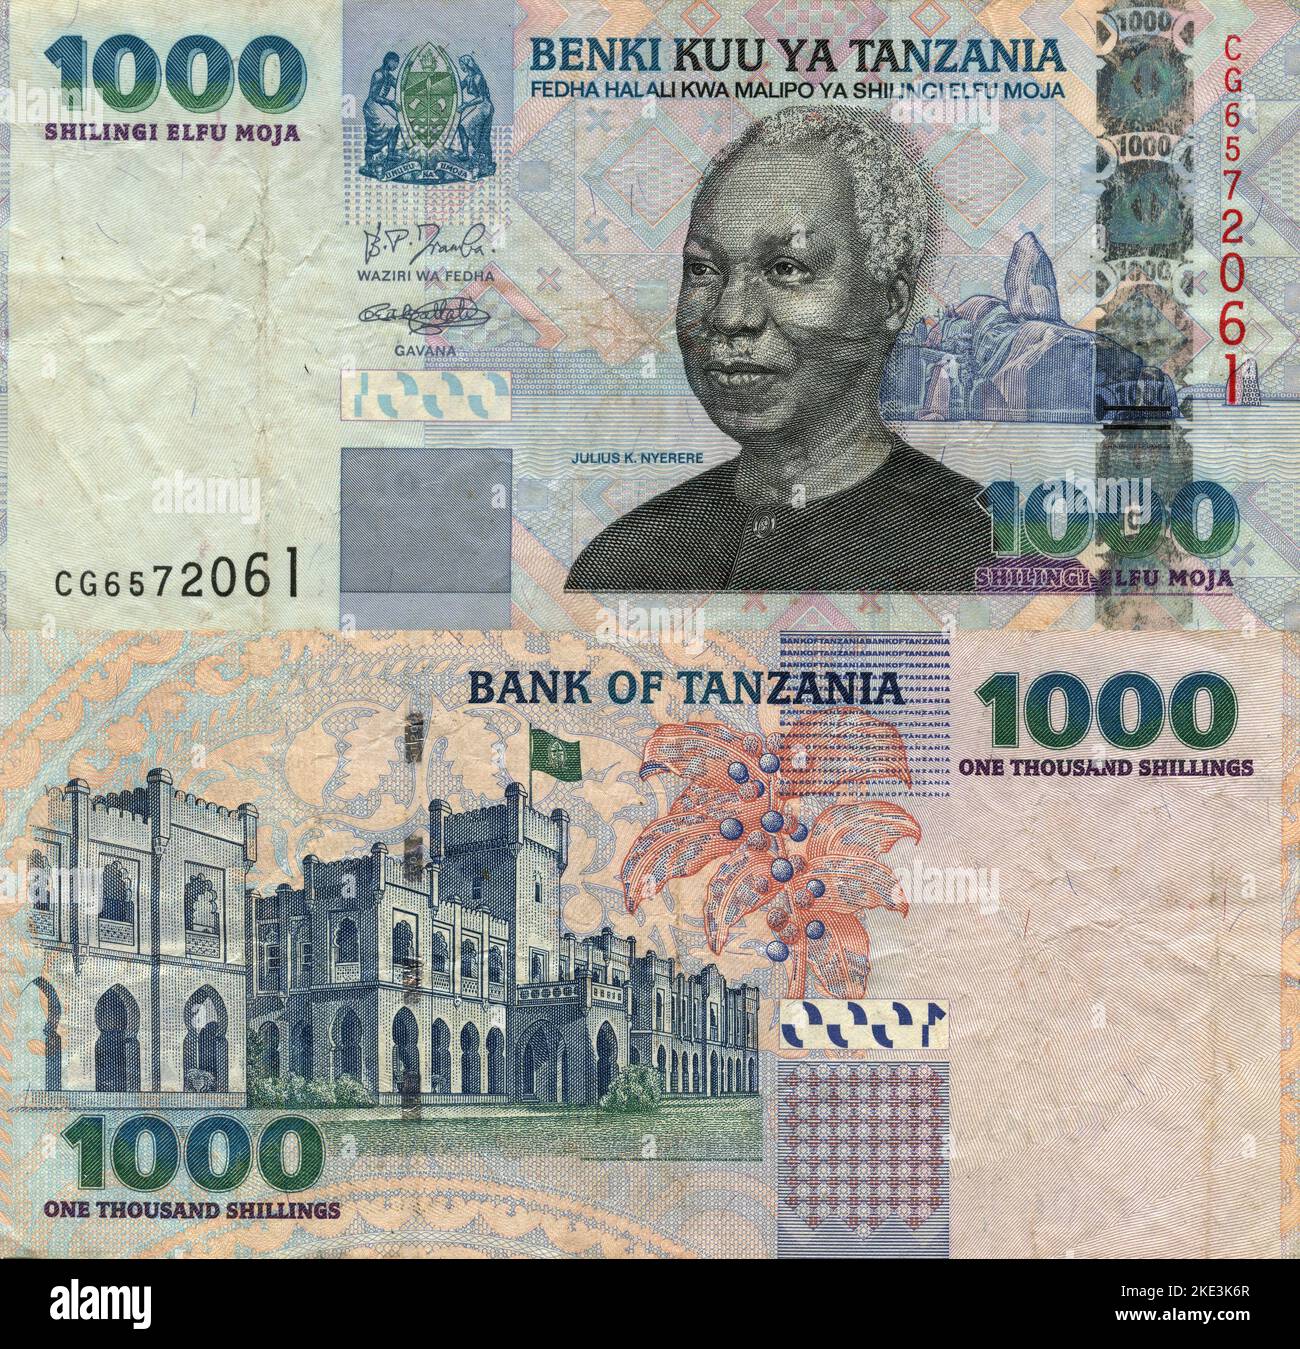 Central Bank of Tanzania 1000 Shilling Banknote, Dodoma 2003 Stock Photo